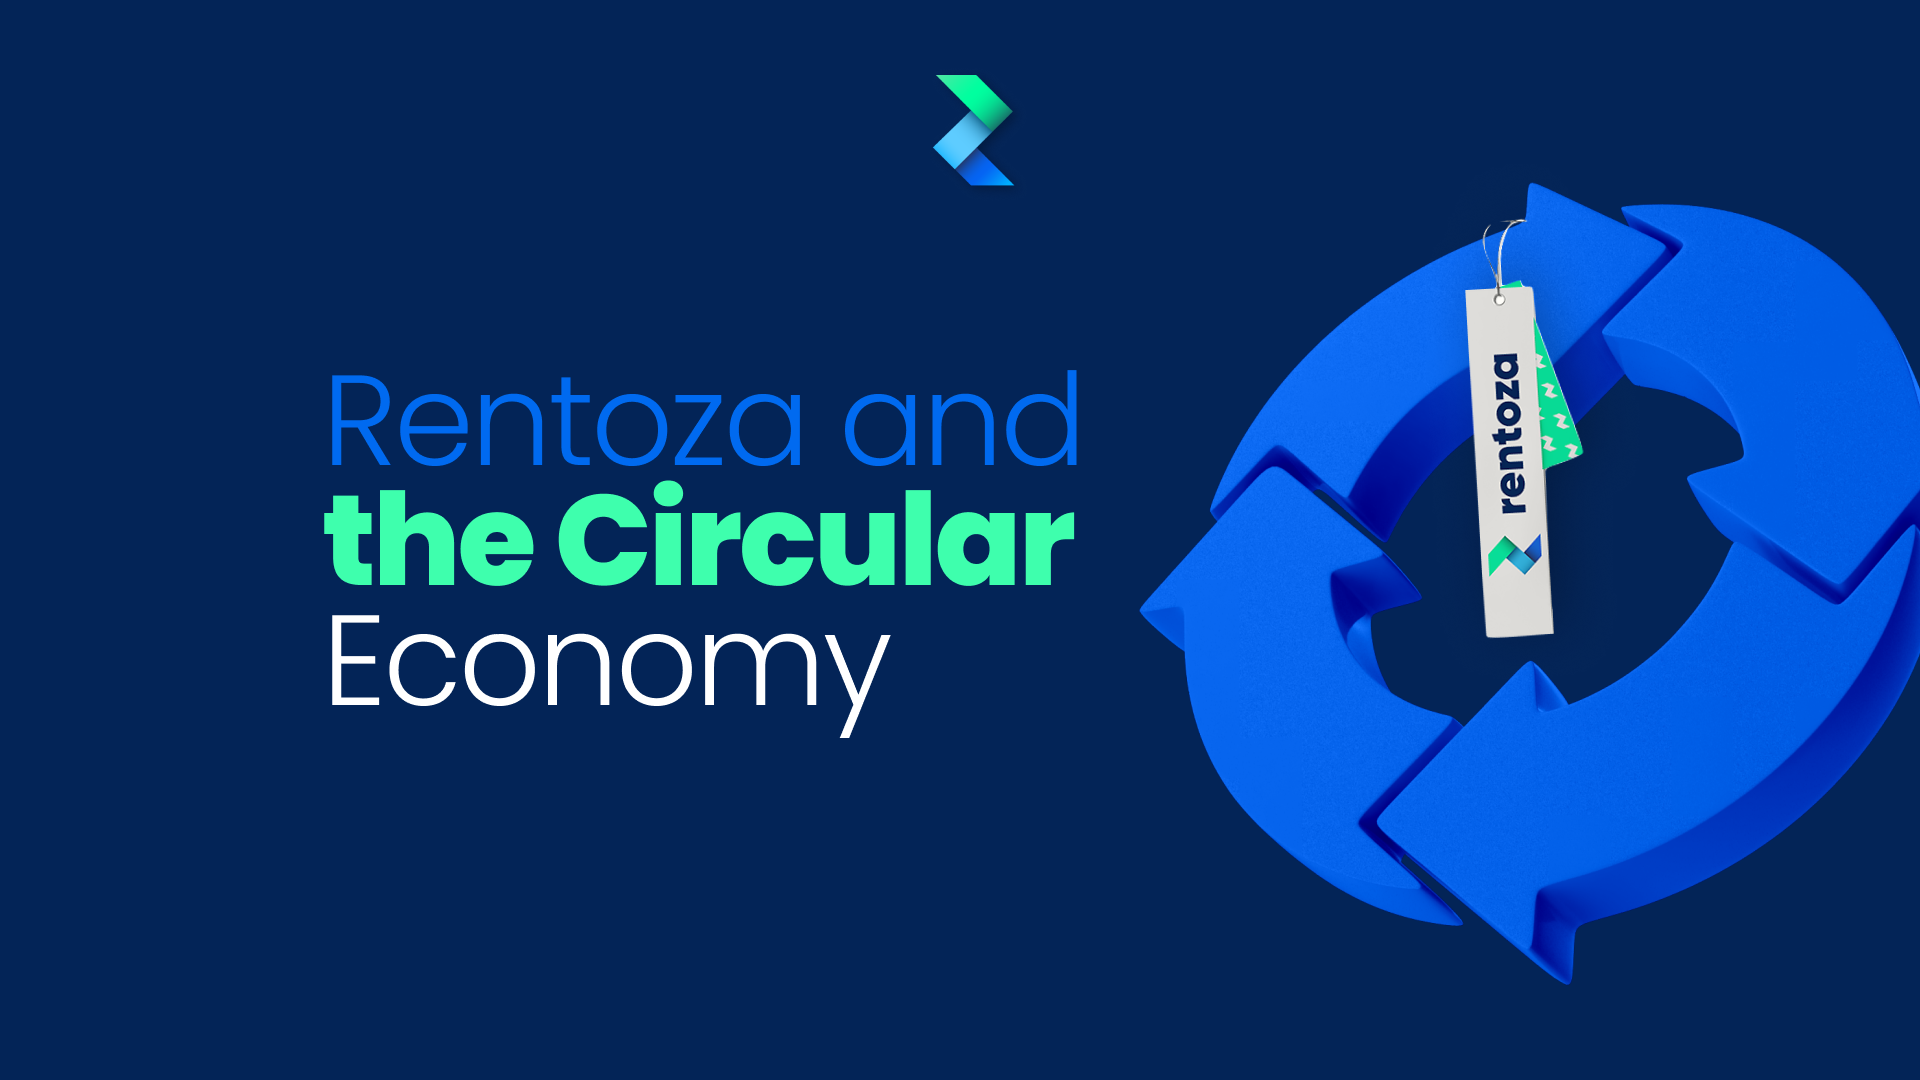 Rentoza and the Circular Economy